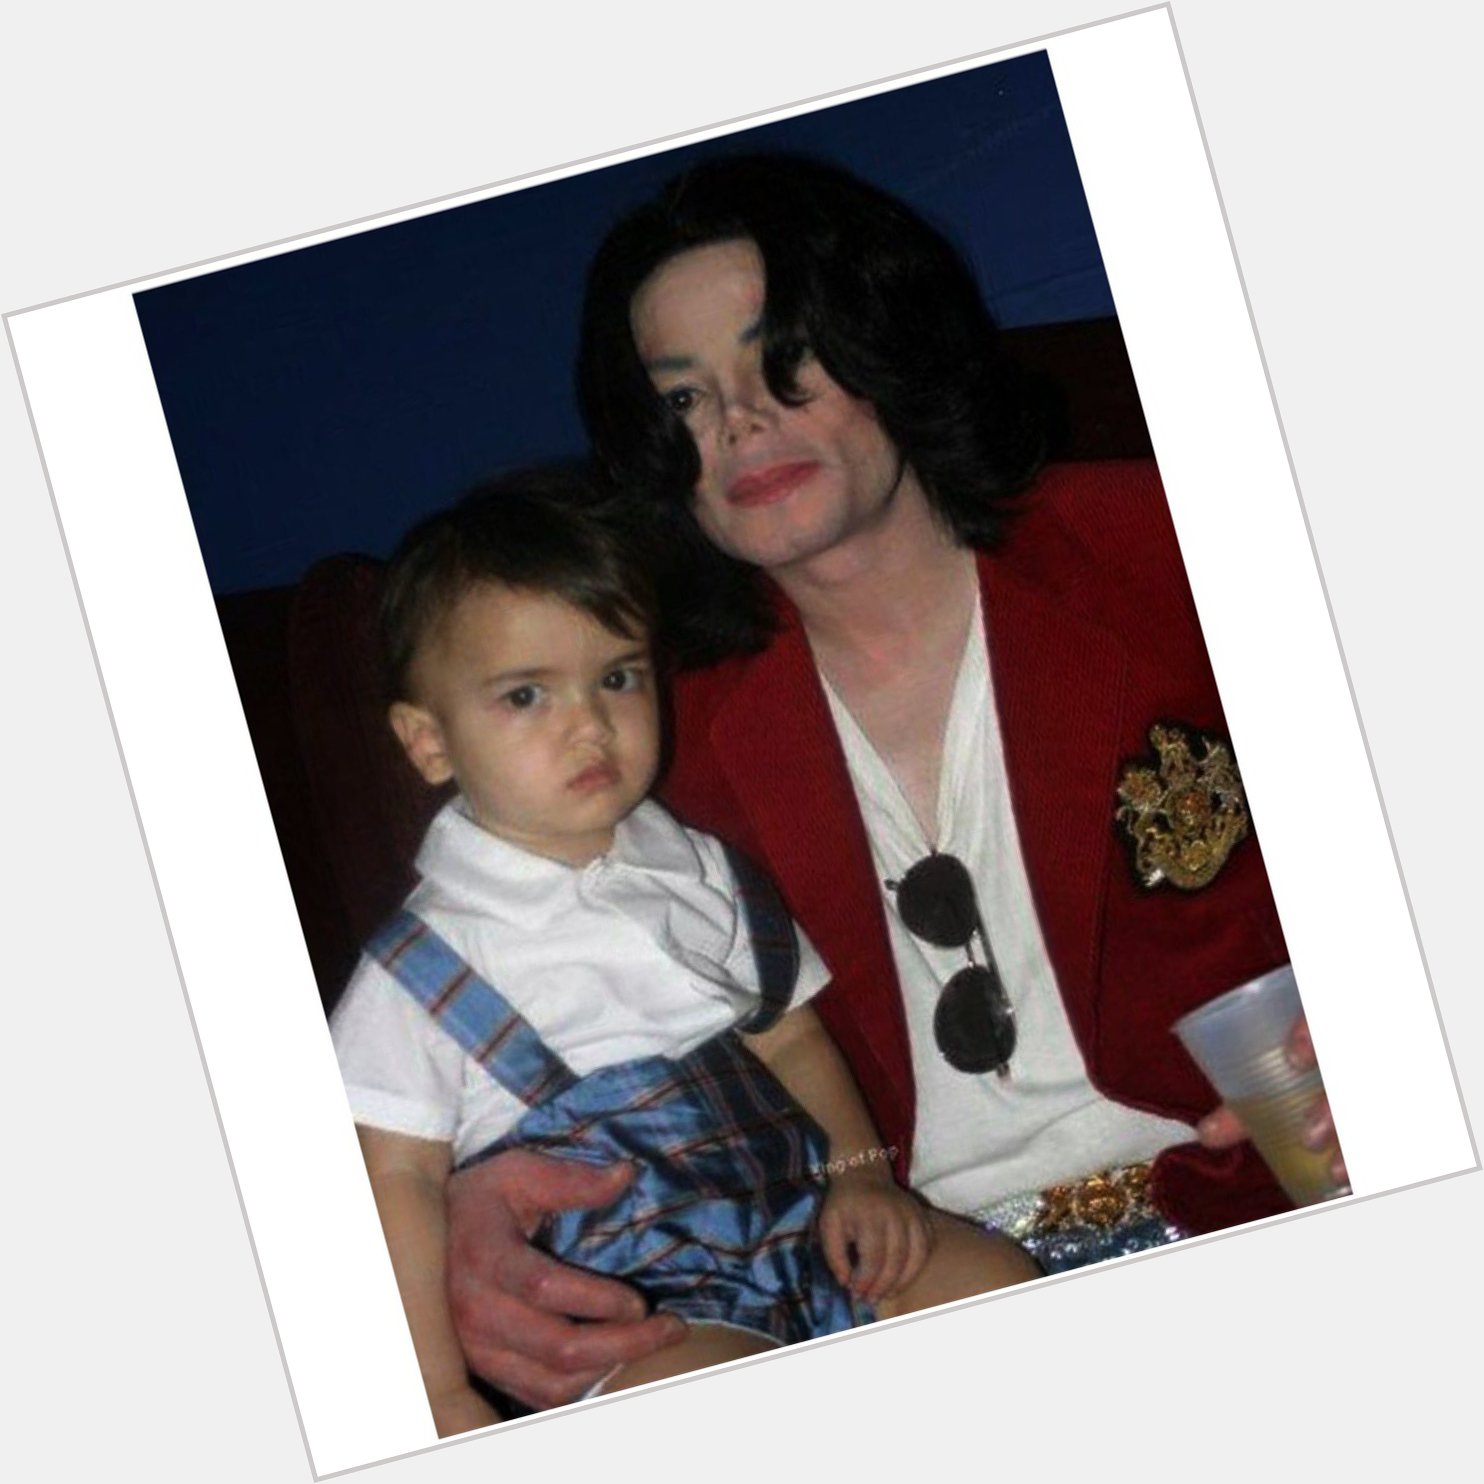 Happy 15th Birthday to Michael Jackson\s youngest child Prince Michael 2 Joseph Jackson, aka Blanket !! 